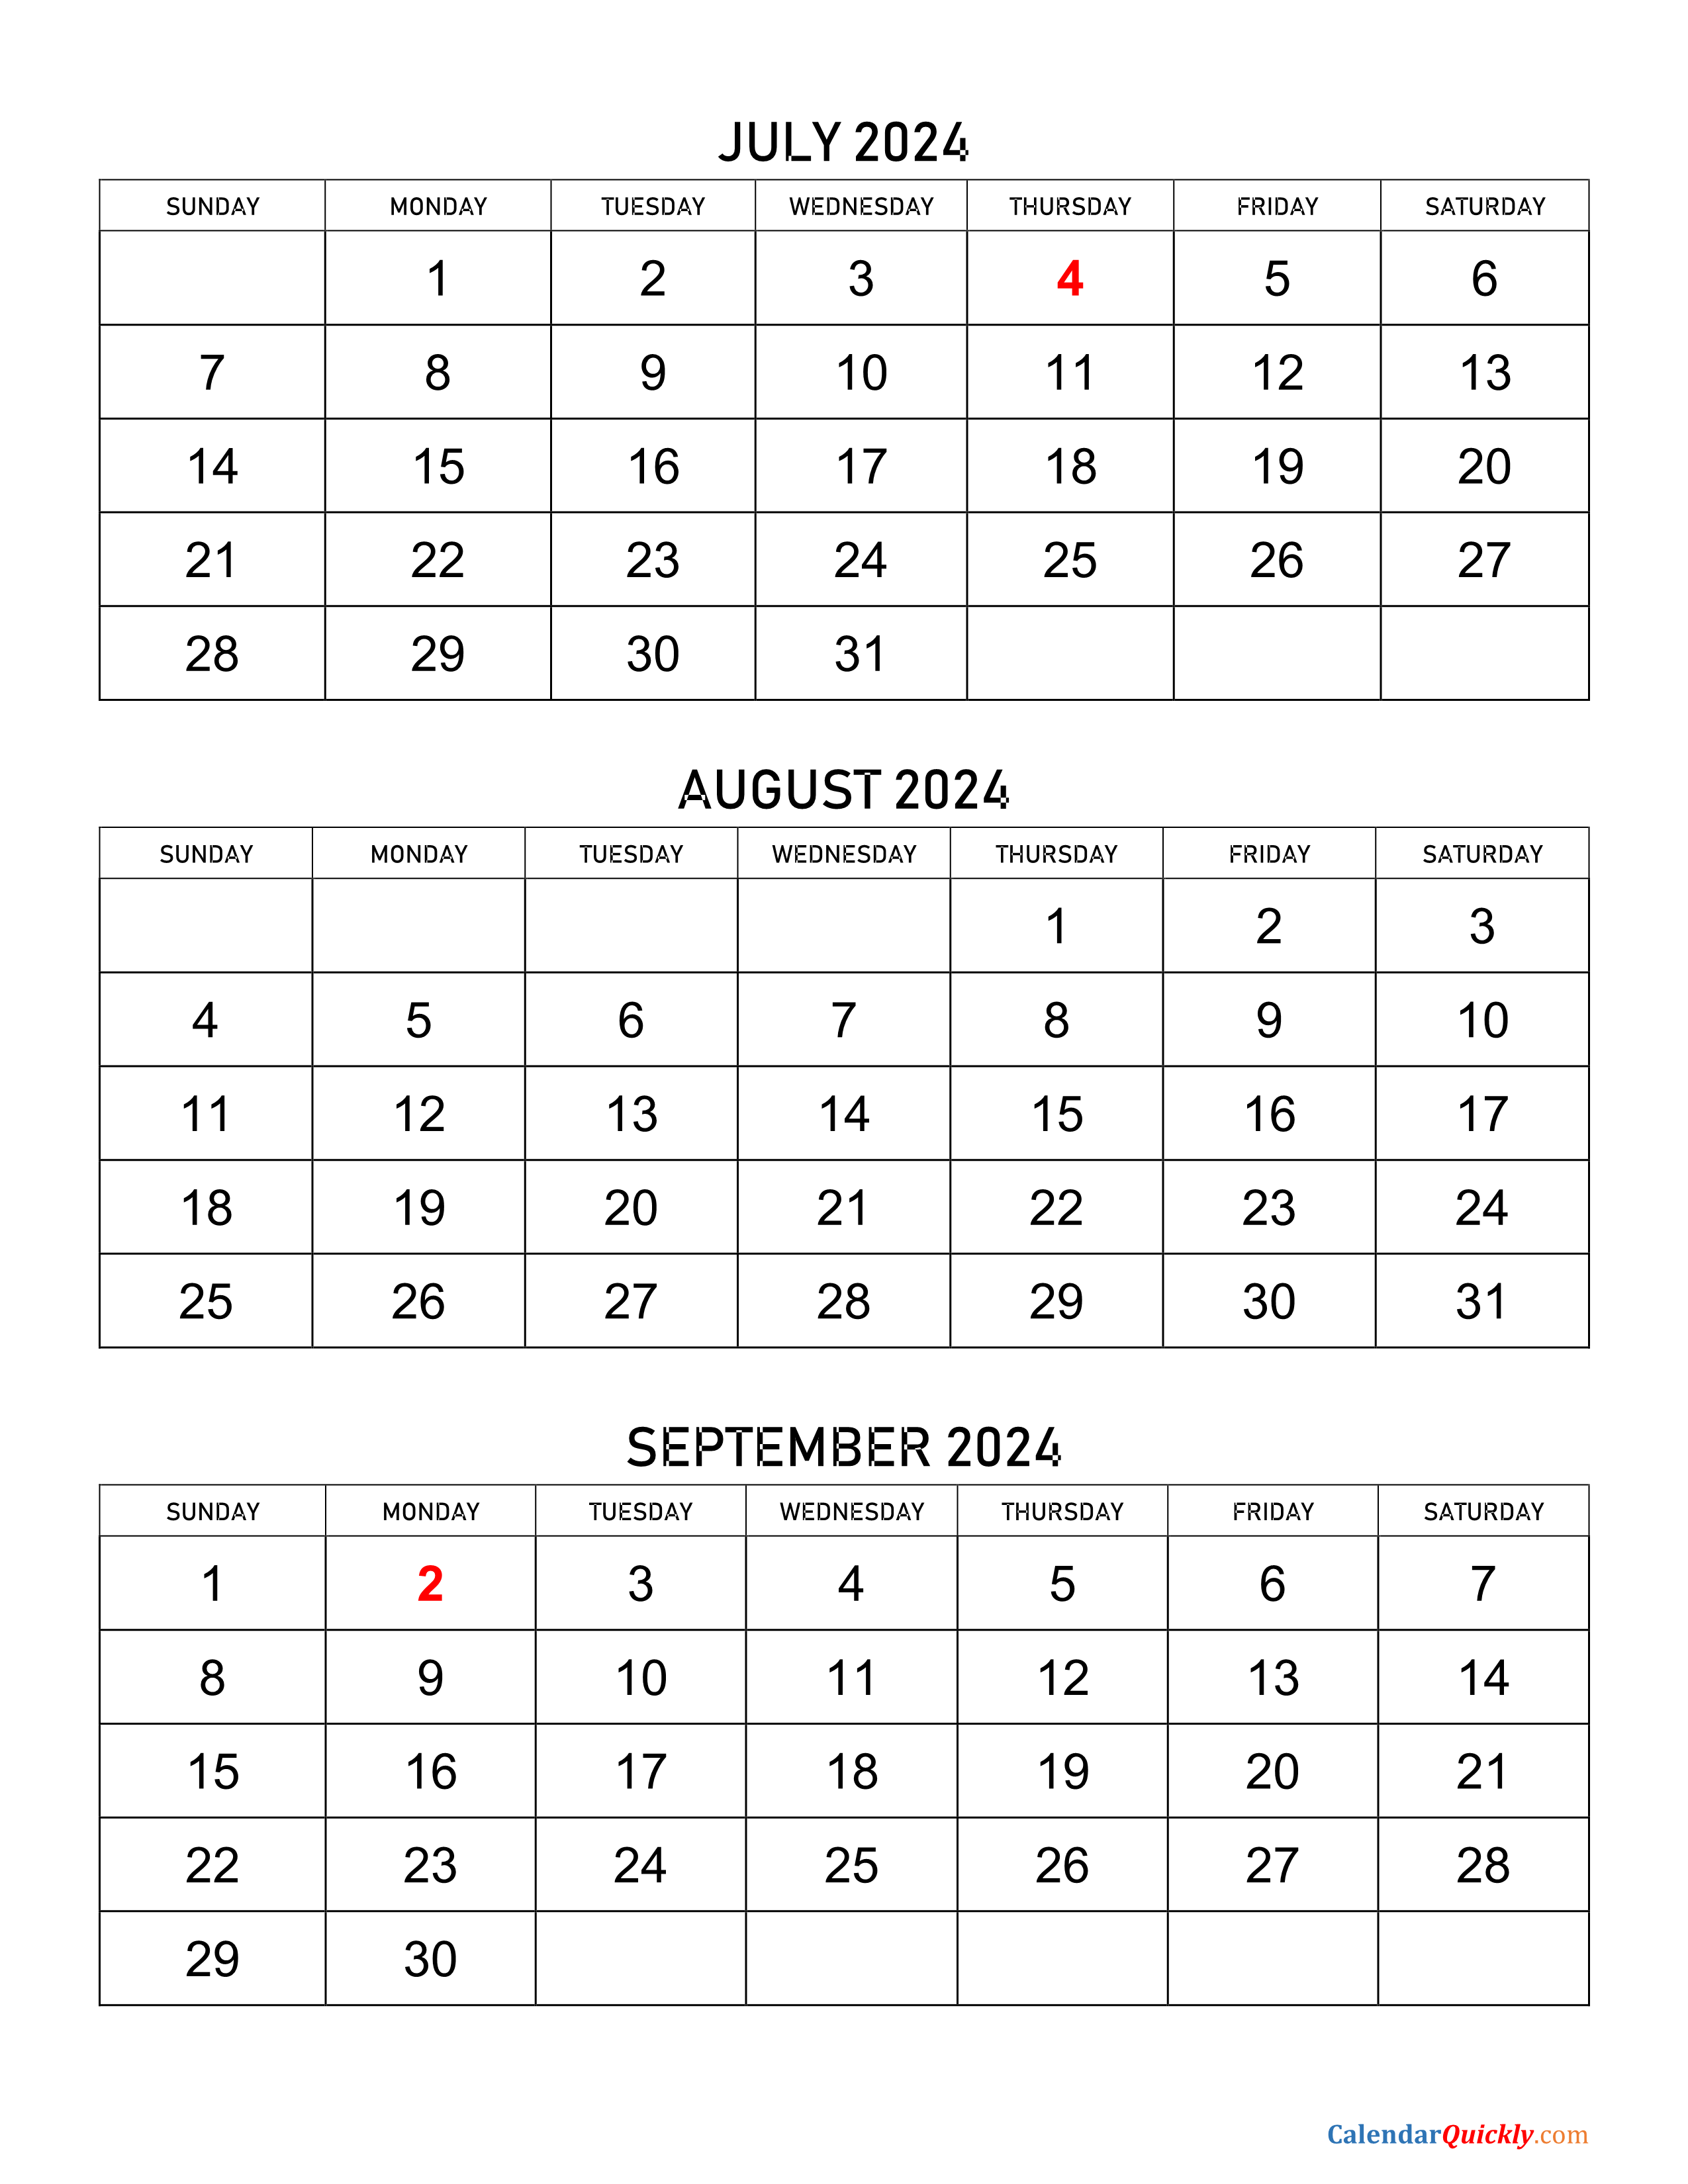 Calendar September 2024 Printable Free Calendar 2024 All Holidays - Free Printable 2024 Calendar July